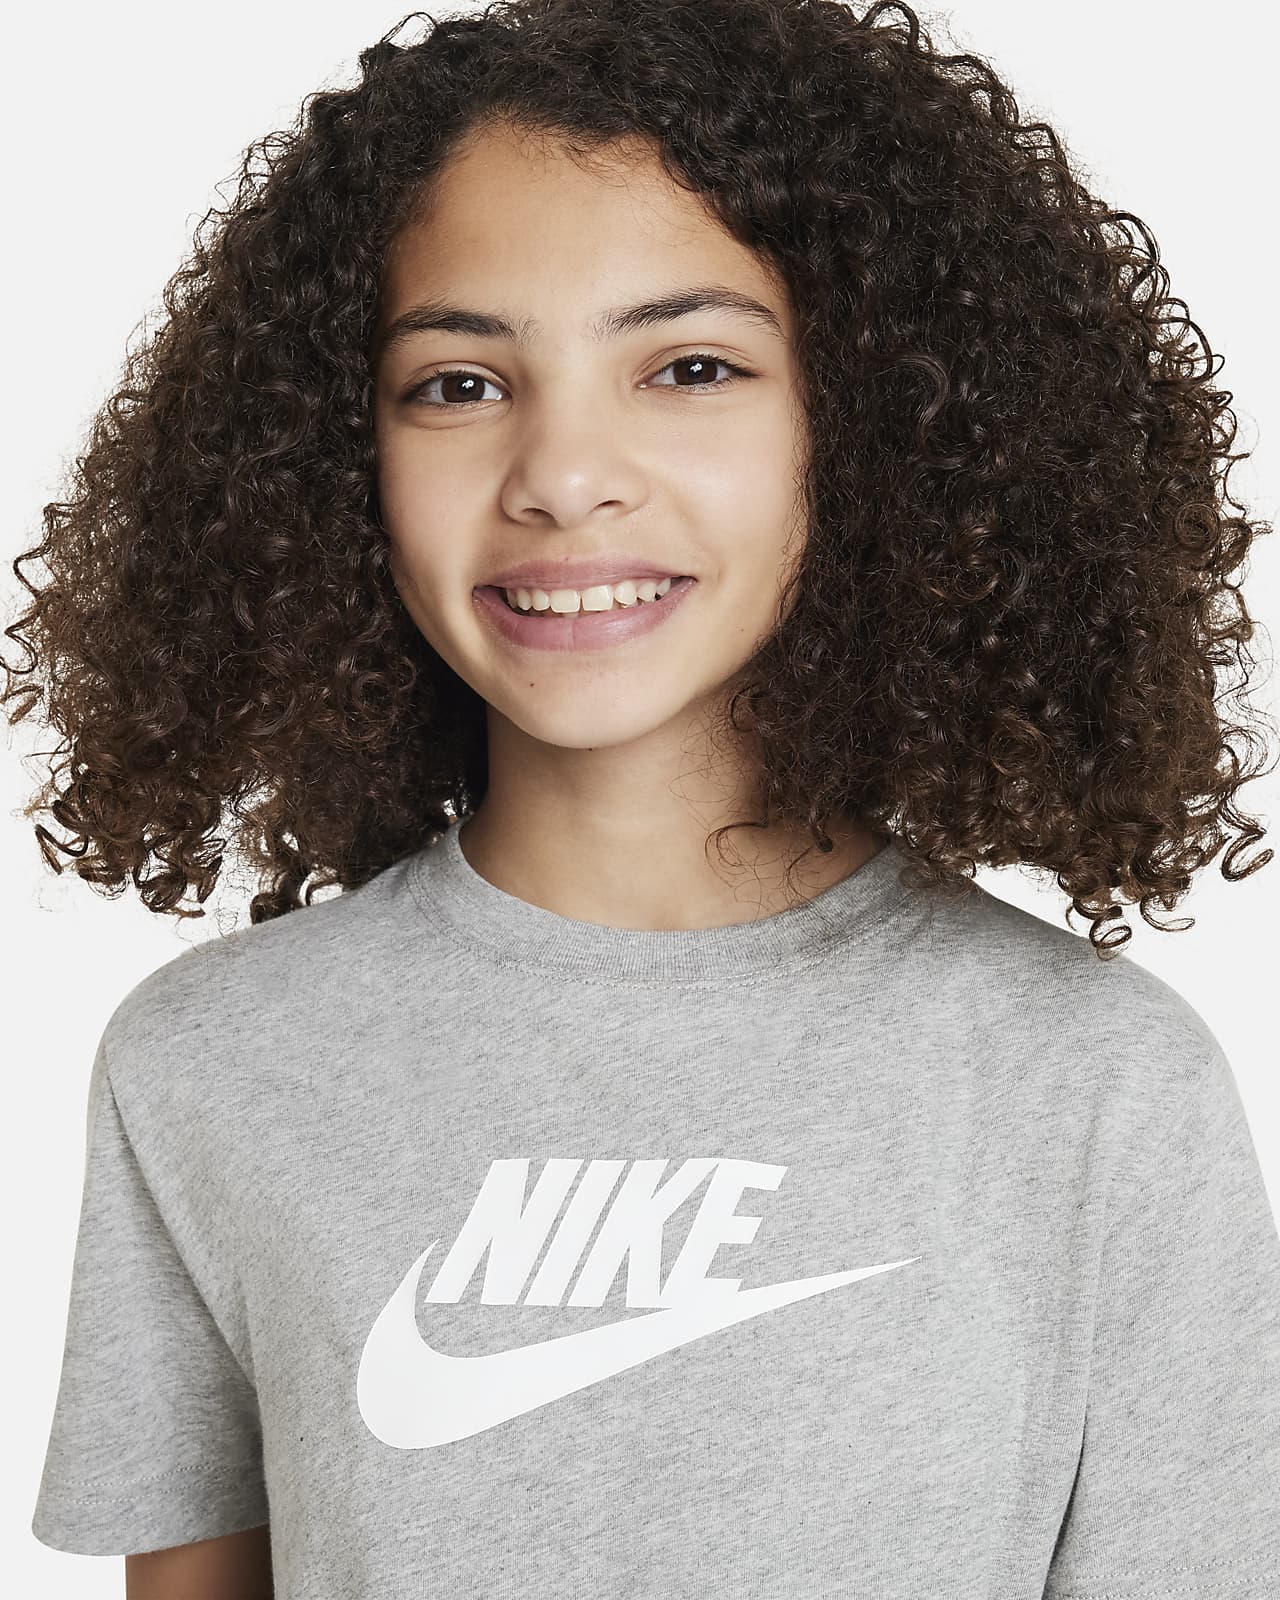 telex Ultieme Huh Nike Sportswear Big Kids' (Girls') T-Shirt. Nike.com